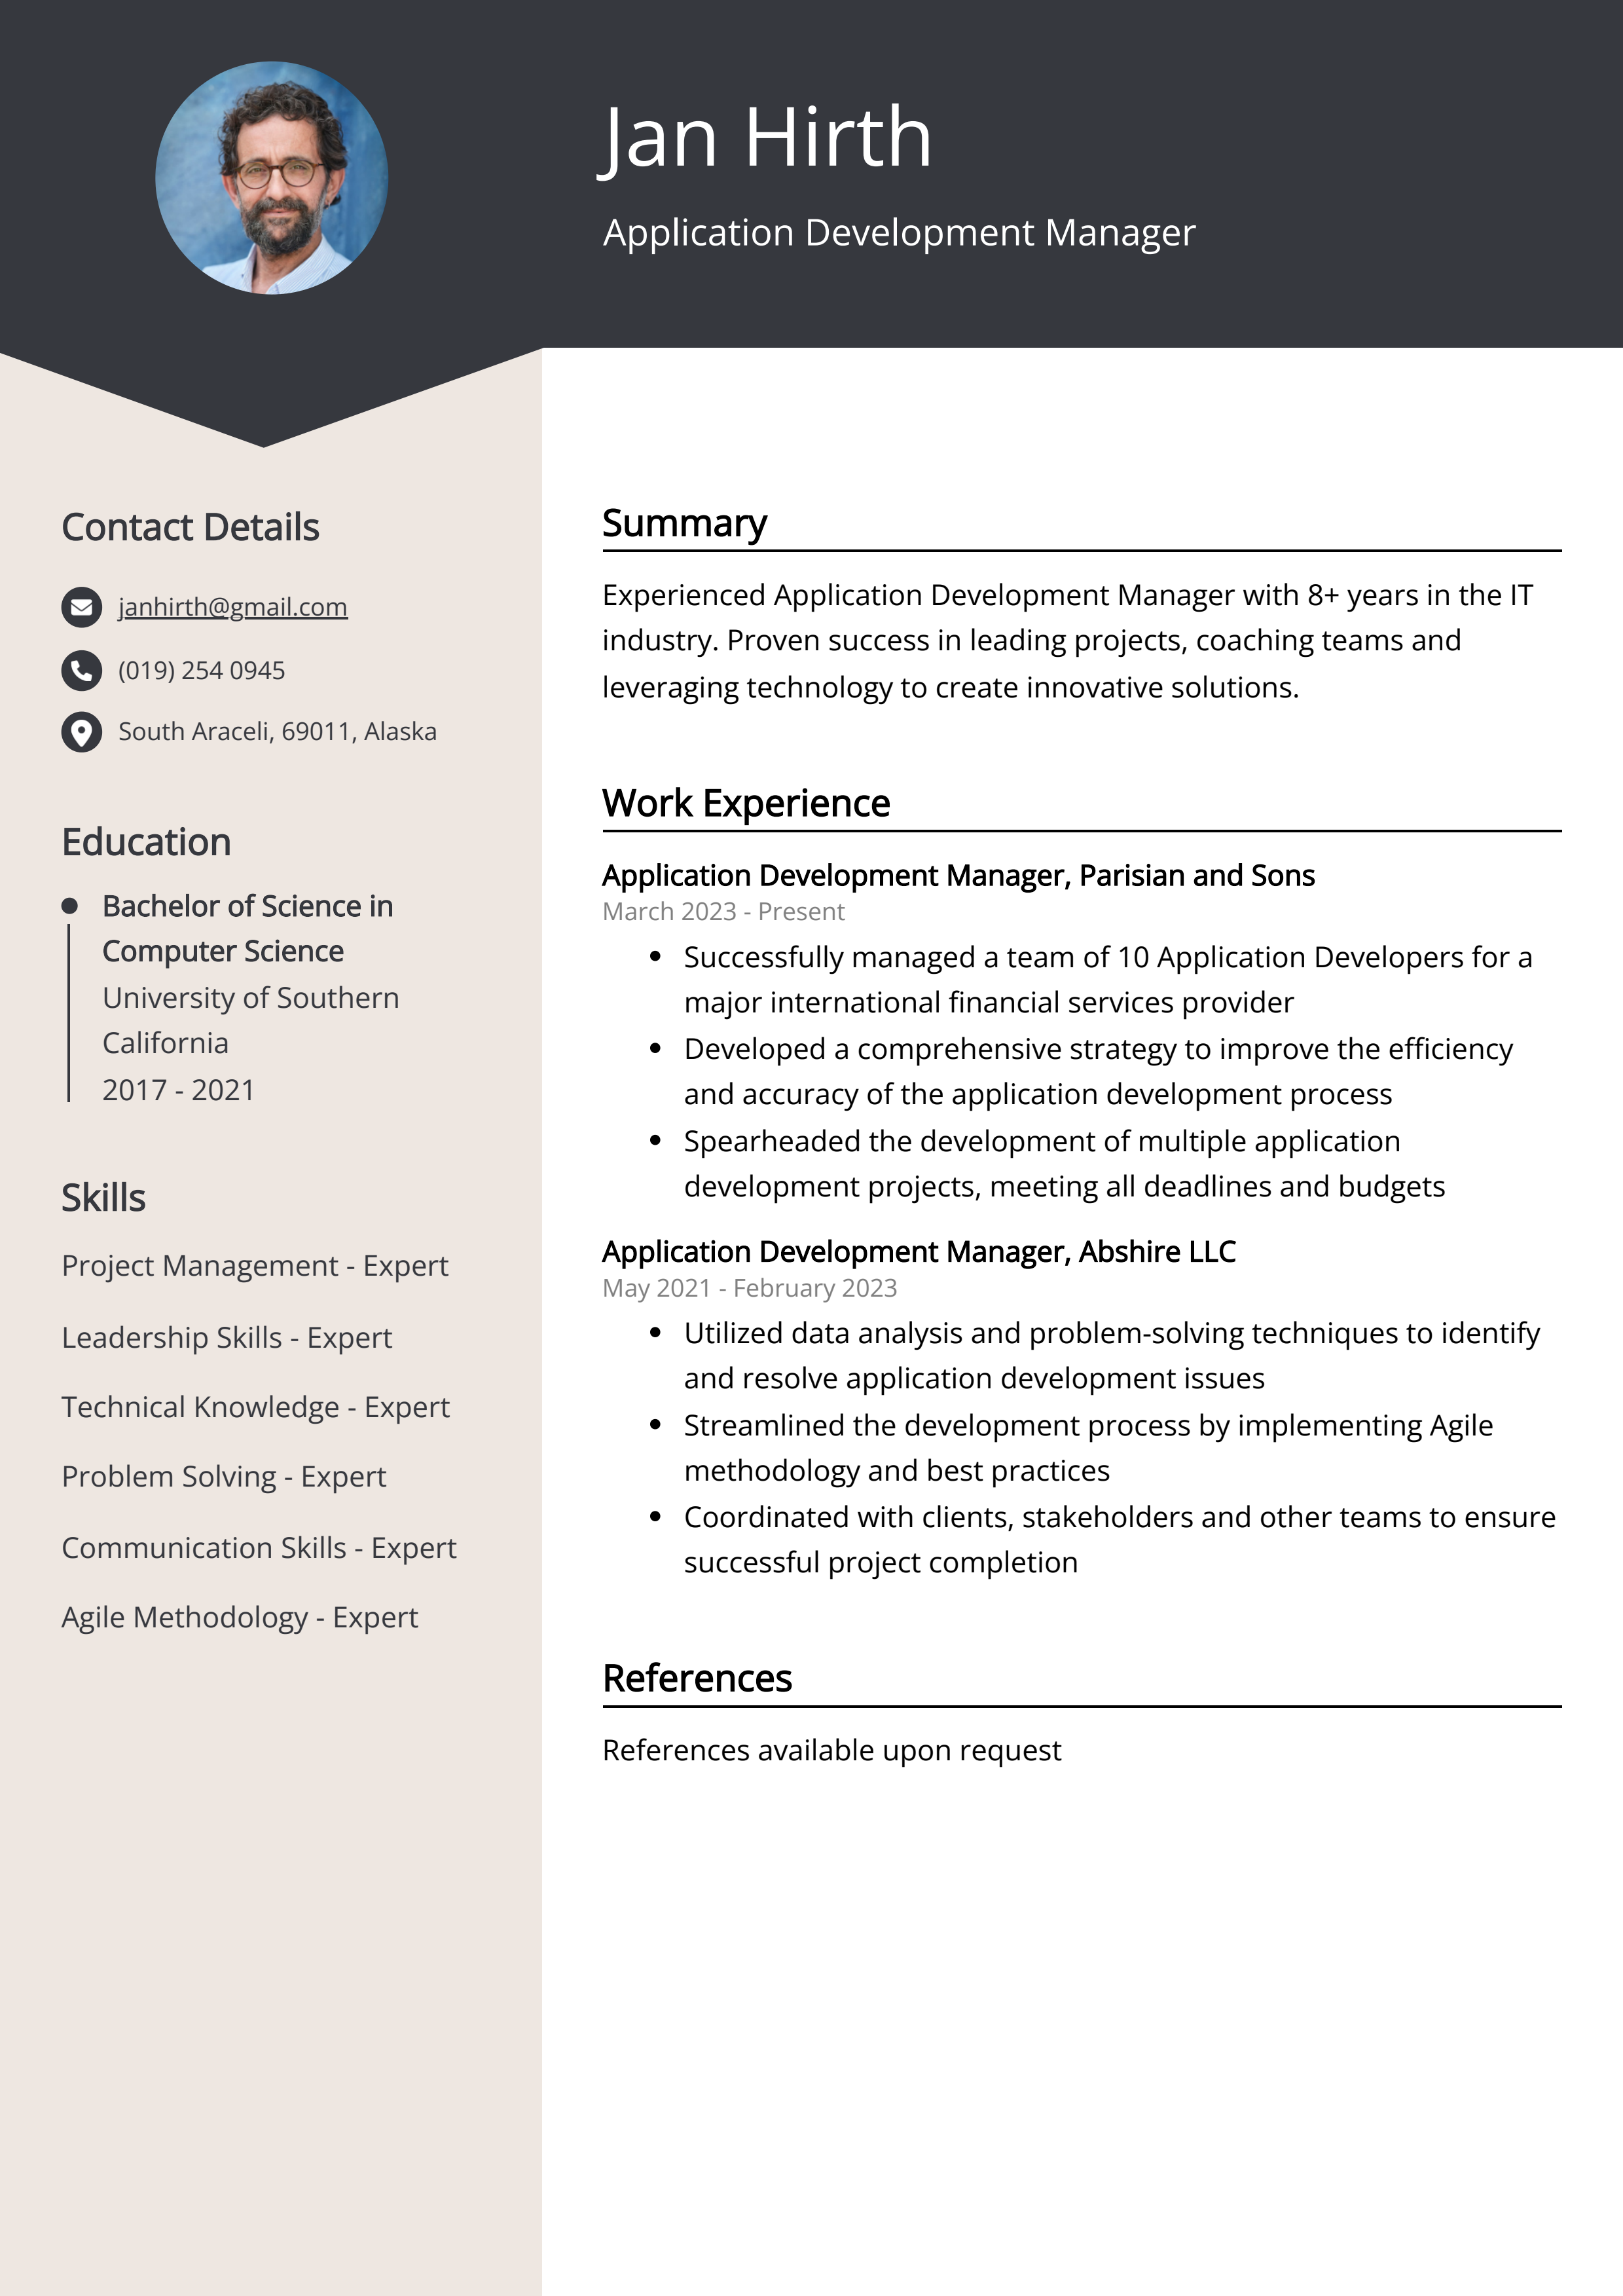 Application Development Manager CV Example